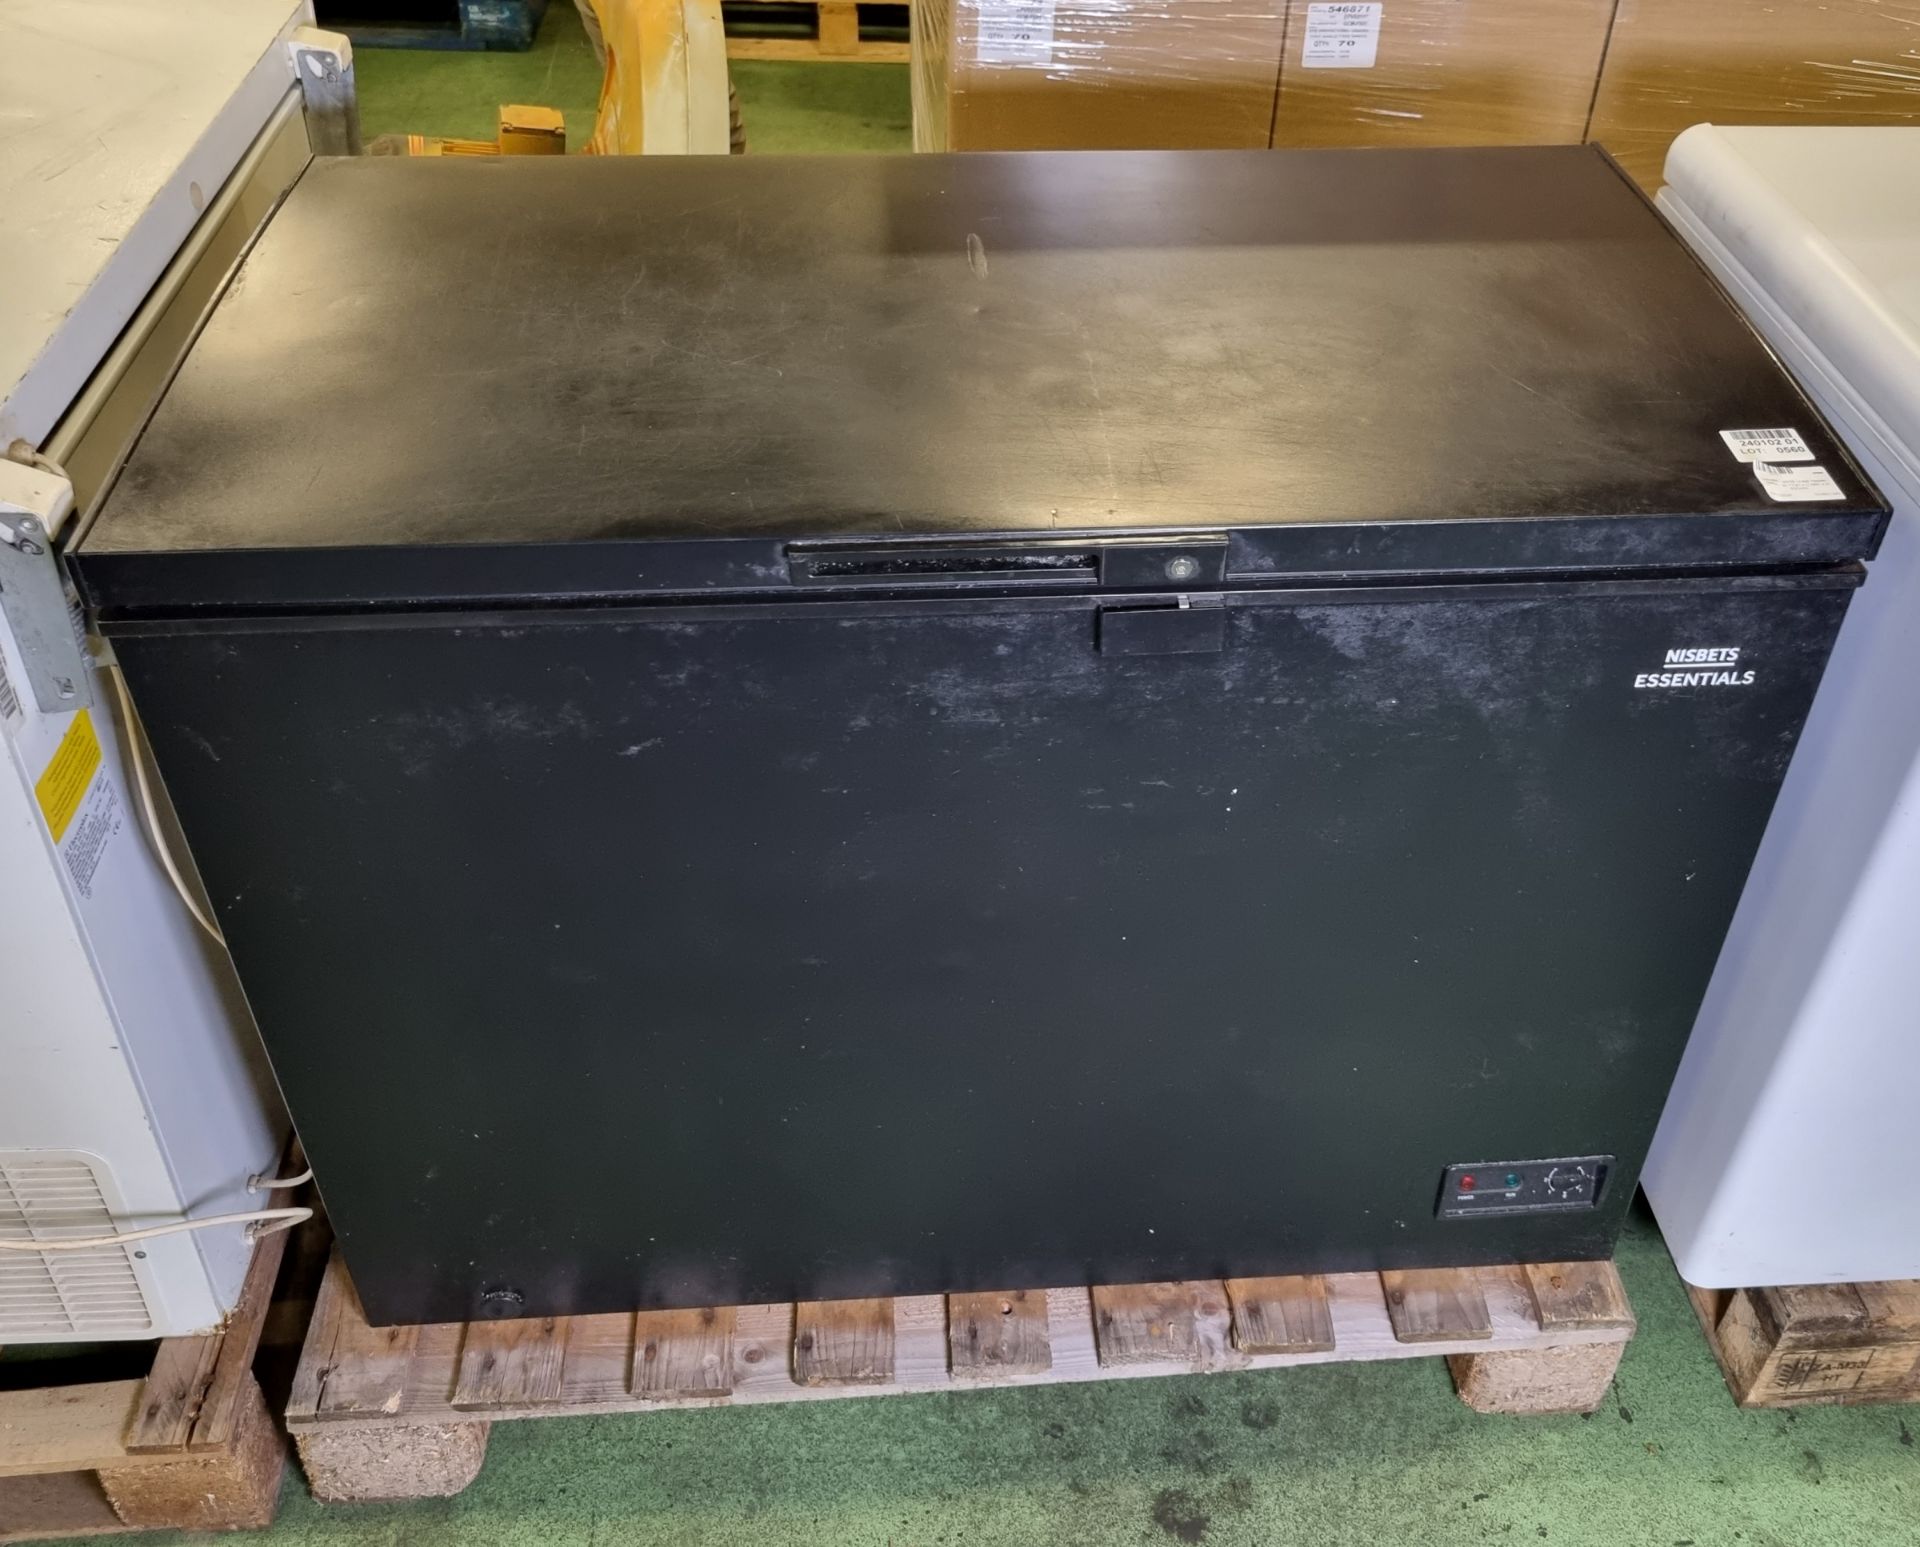 Nisbets DA536 chest freezer - black - W 1120 x D 660 x H 830mm - Image 2 of 5